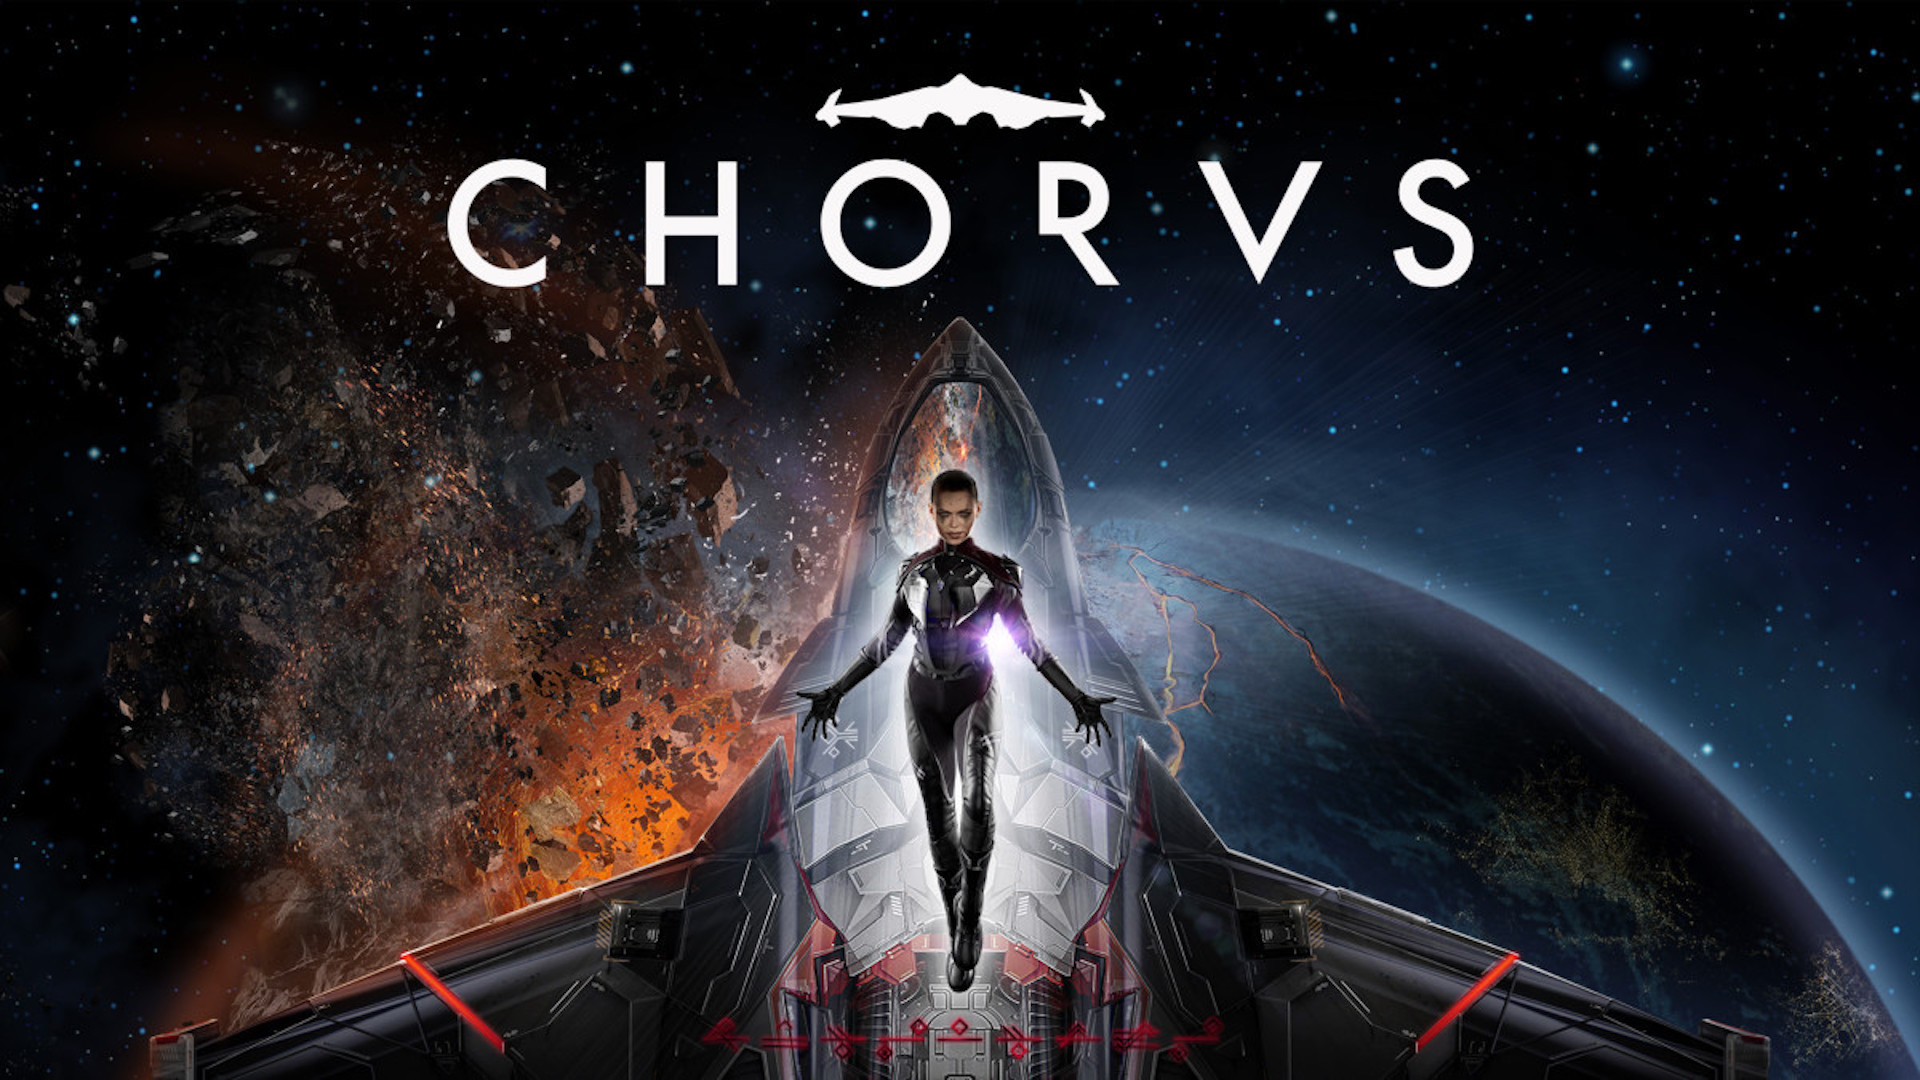 Chorus Looks Slick In Brief Gameplay Debut Trailer